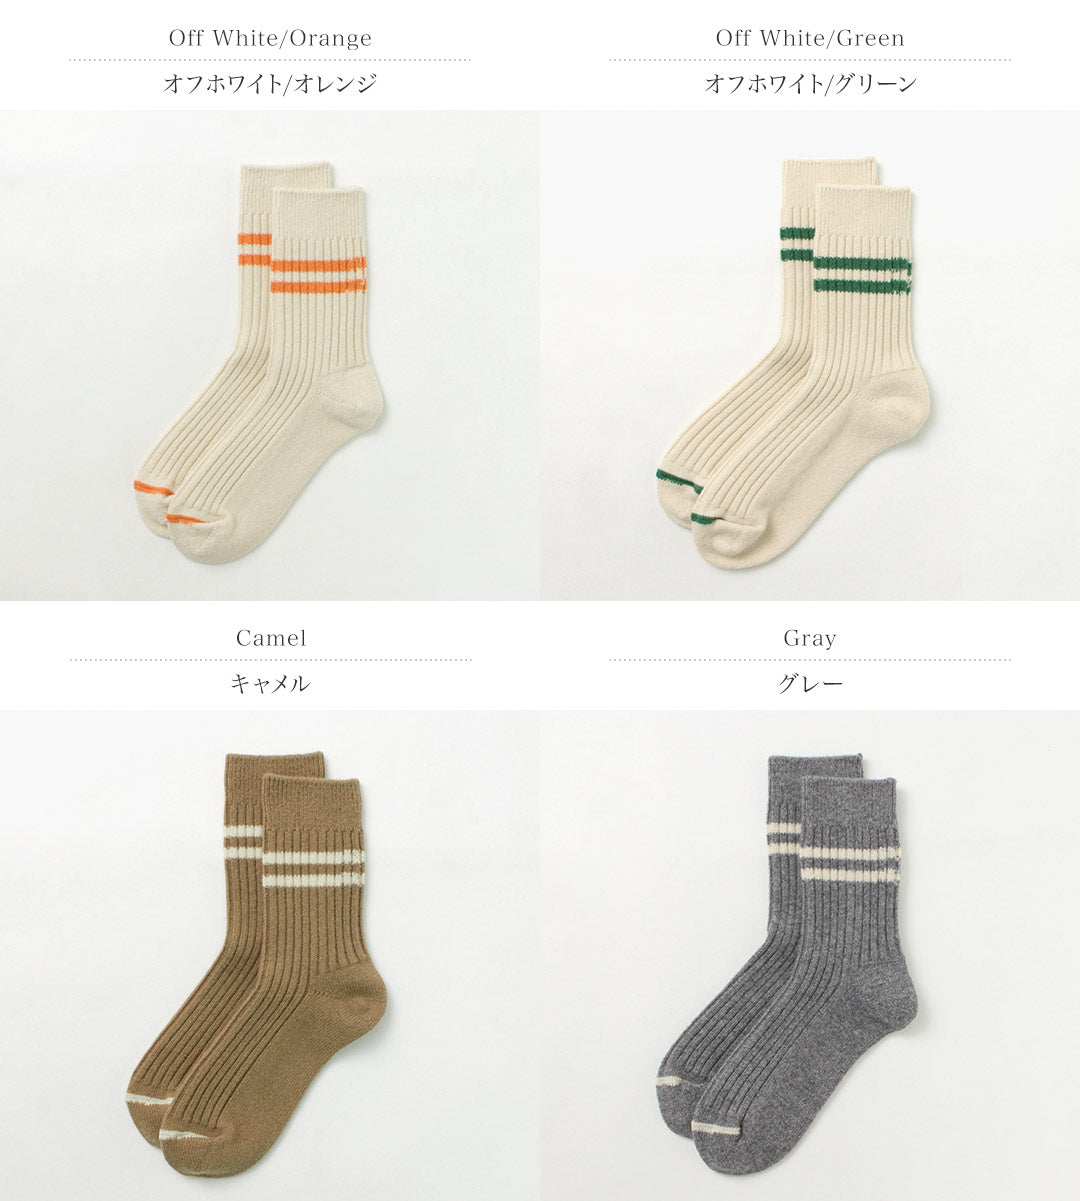 ROTOTO（ロトト） メリノラムウール ストライプソックス / メンズ レディース 靴下 ウール 日本製 MERINO LAMBS WOOL STRIPE SOCKS